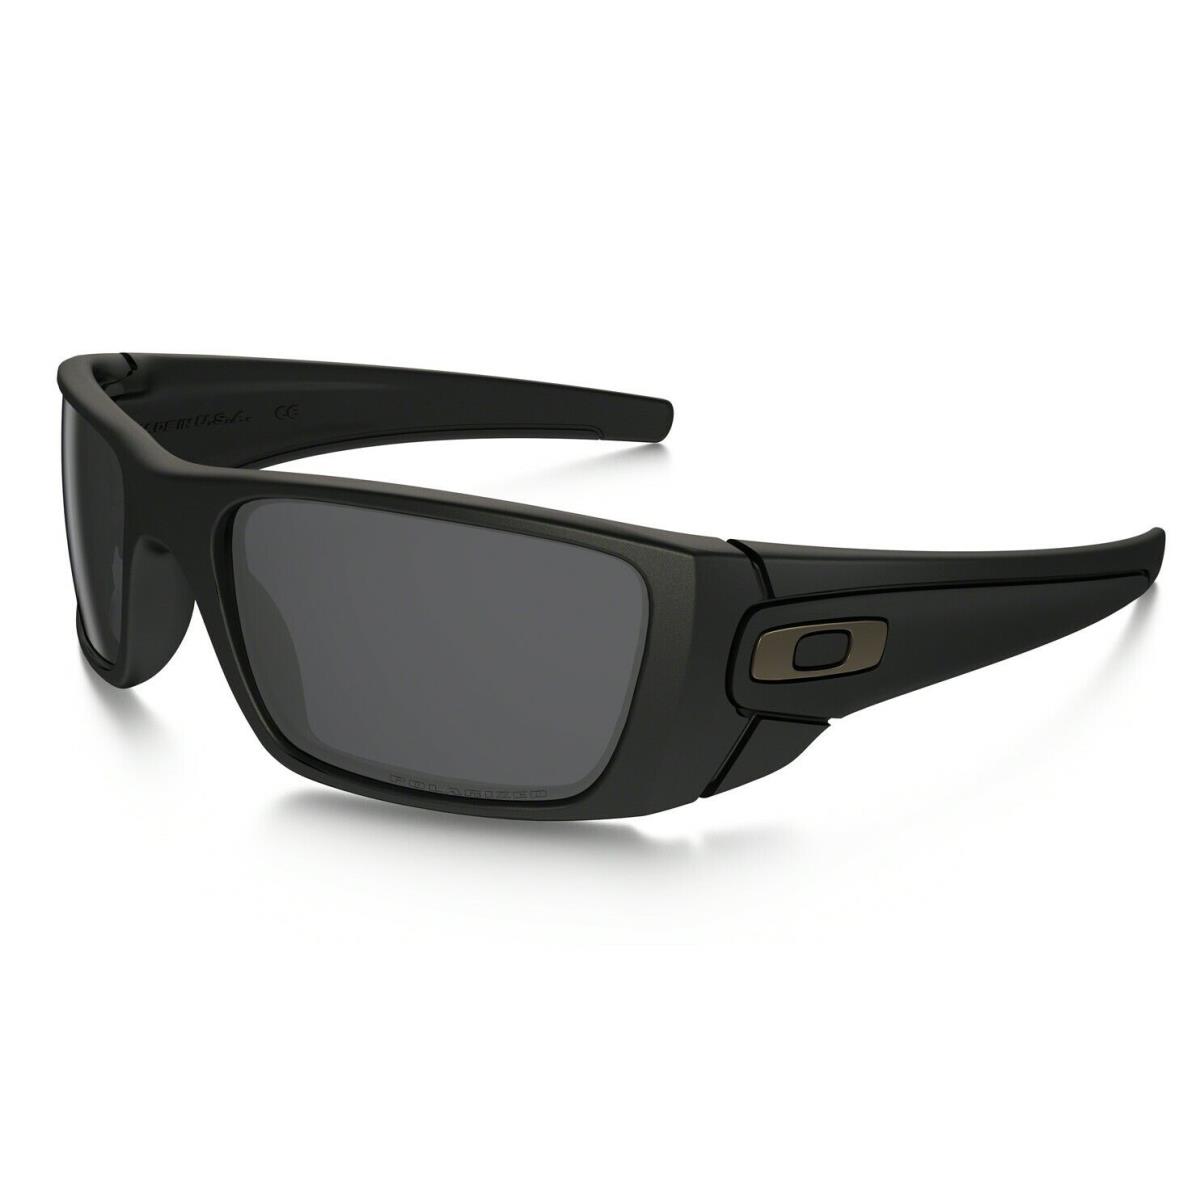 Oakley Fuel Cell Sunglasses Matte Black Frames Grey Polarized Lens Eyewear Sun